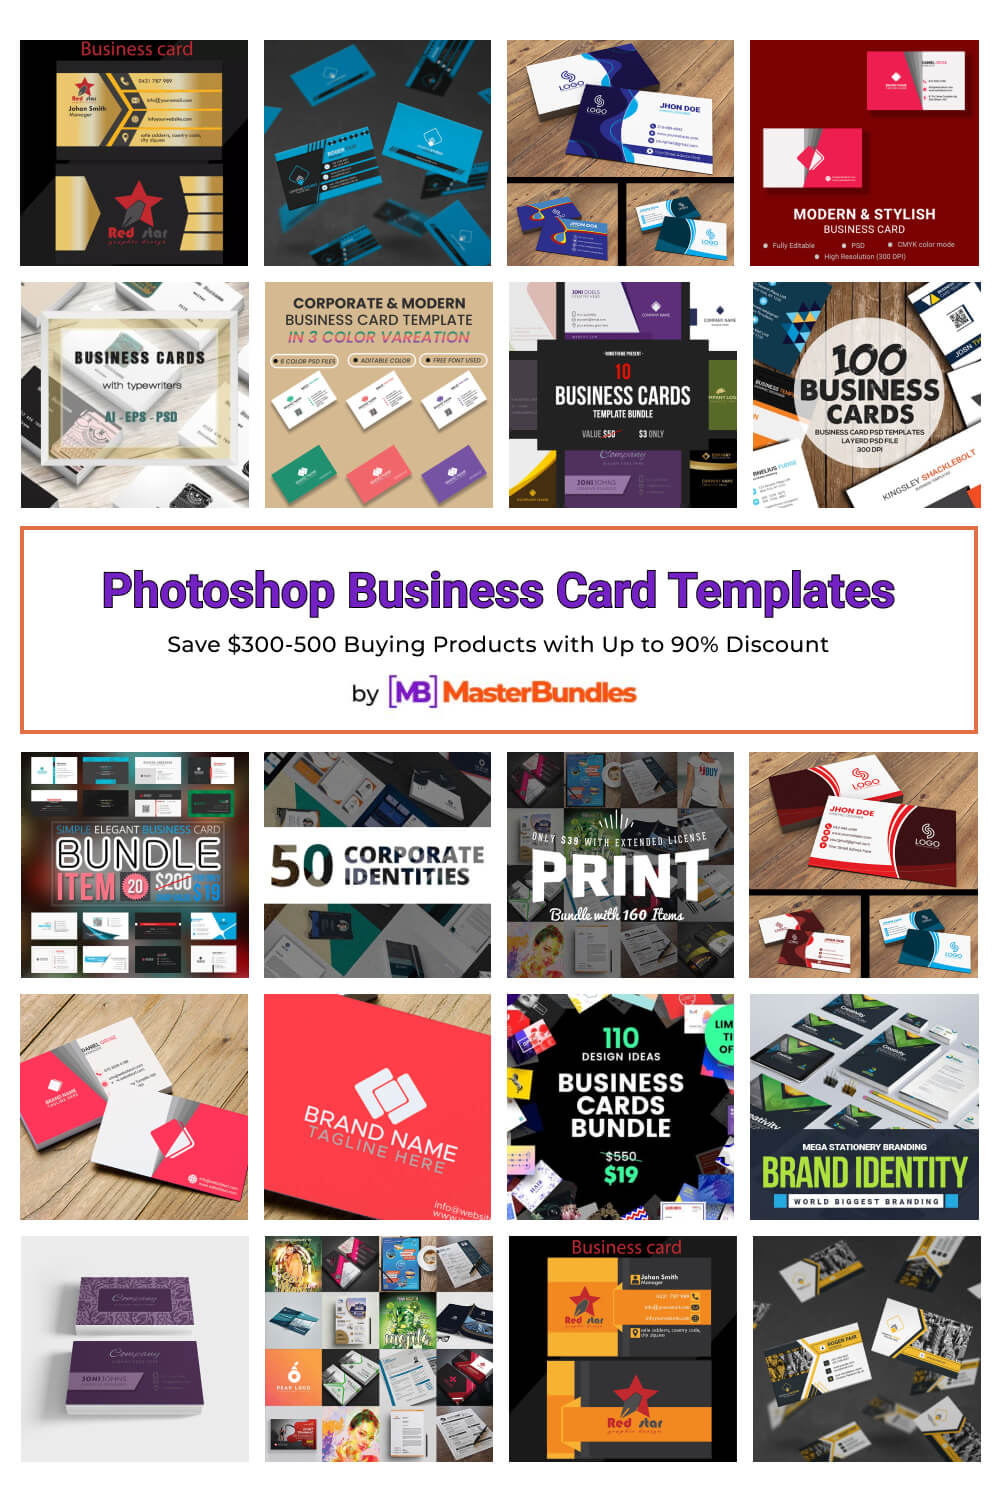 photoshop business card templates pinterest image.